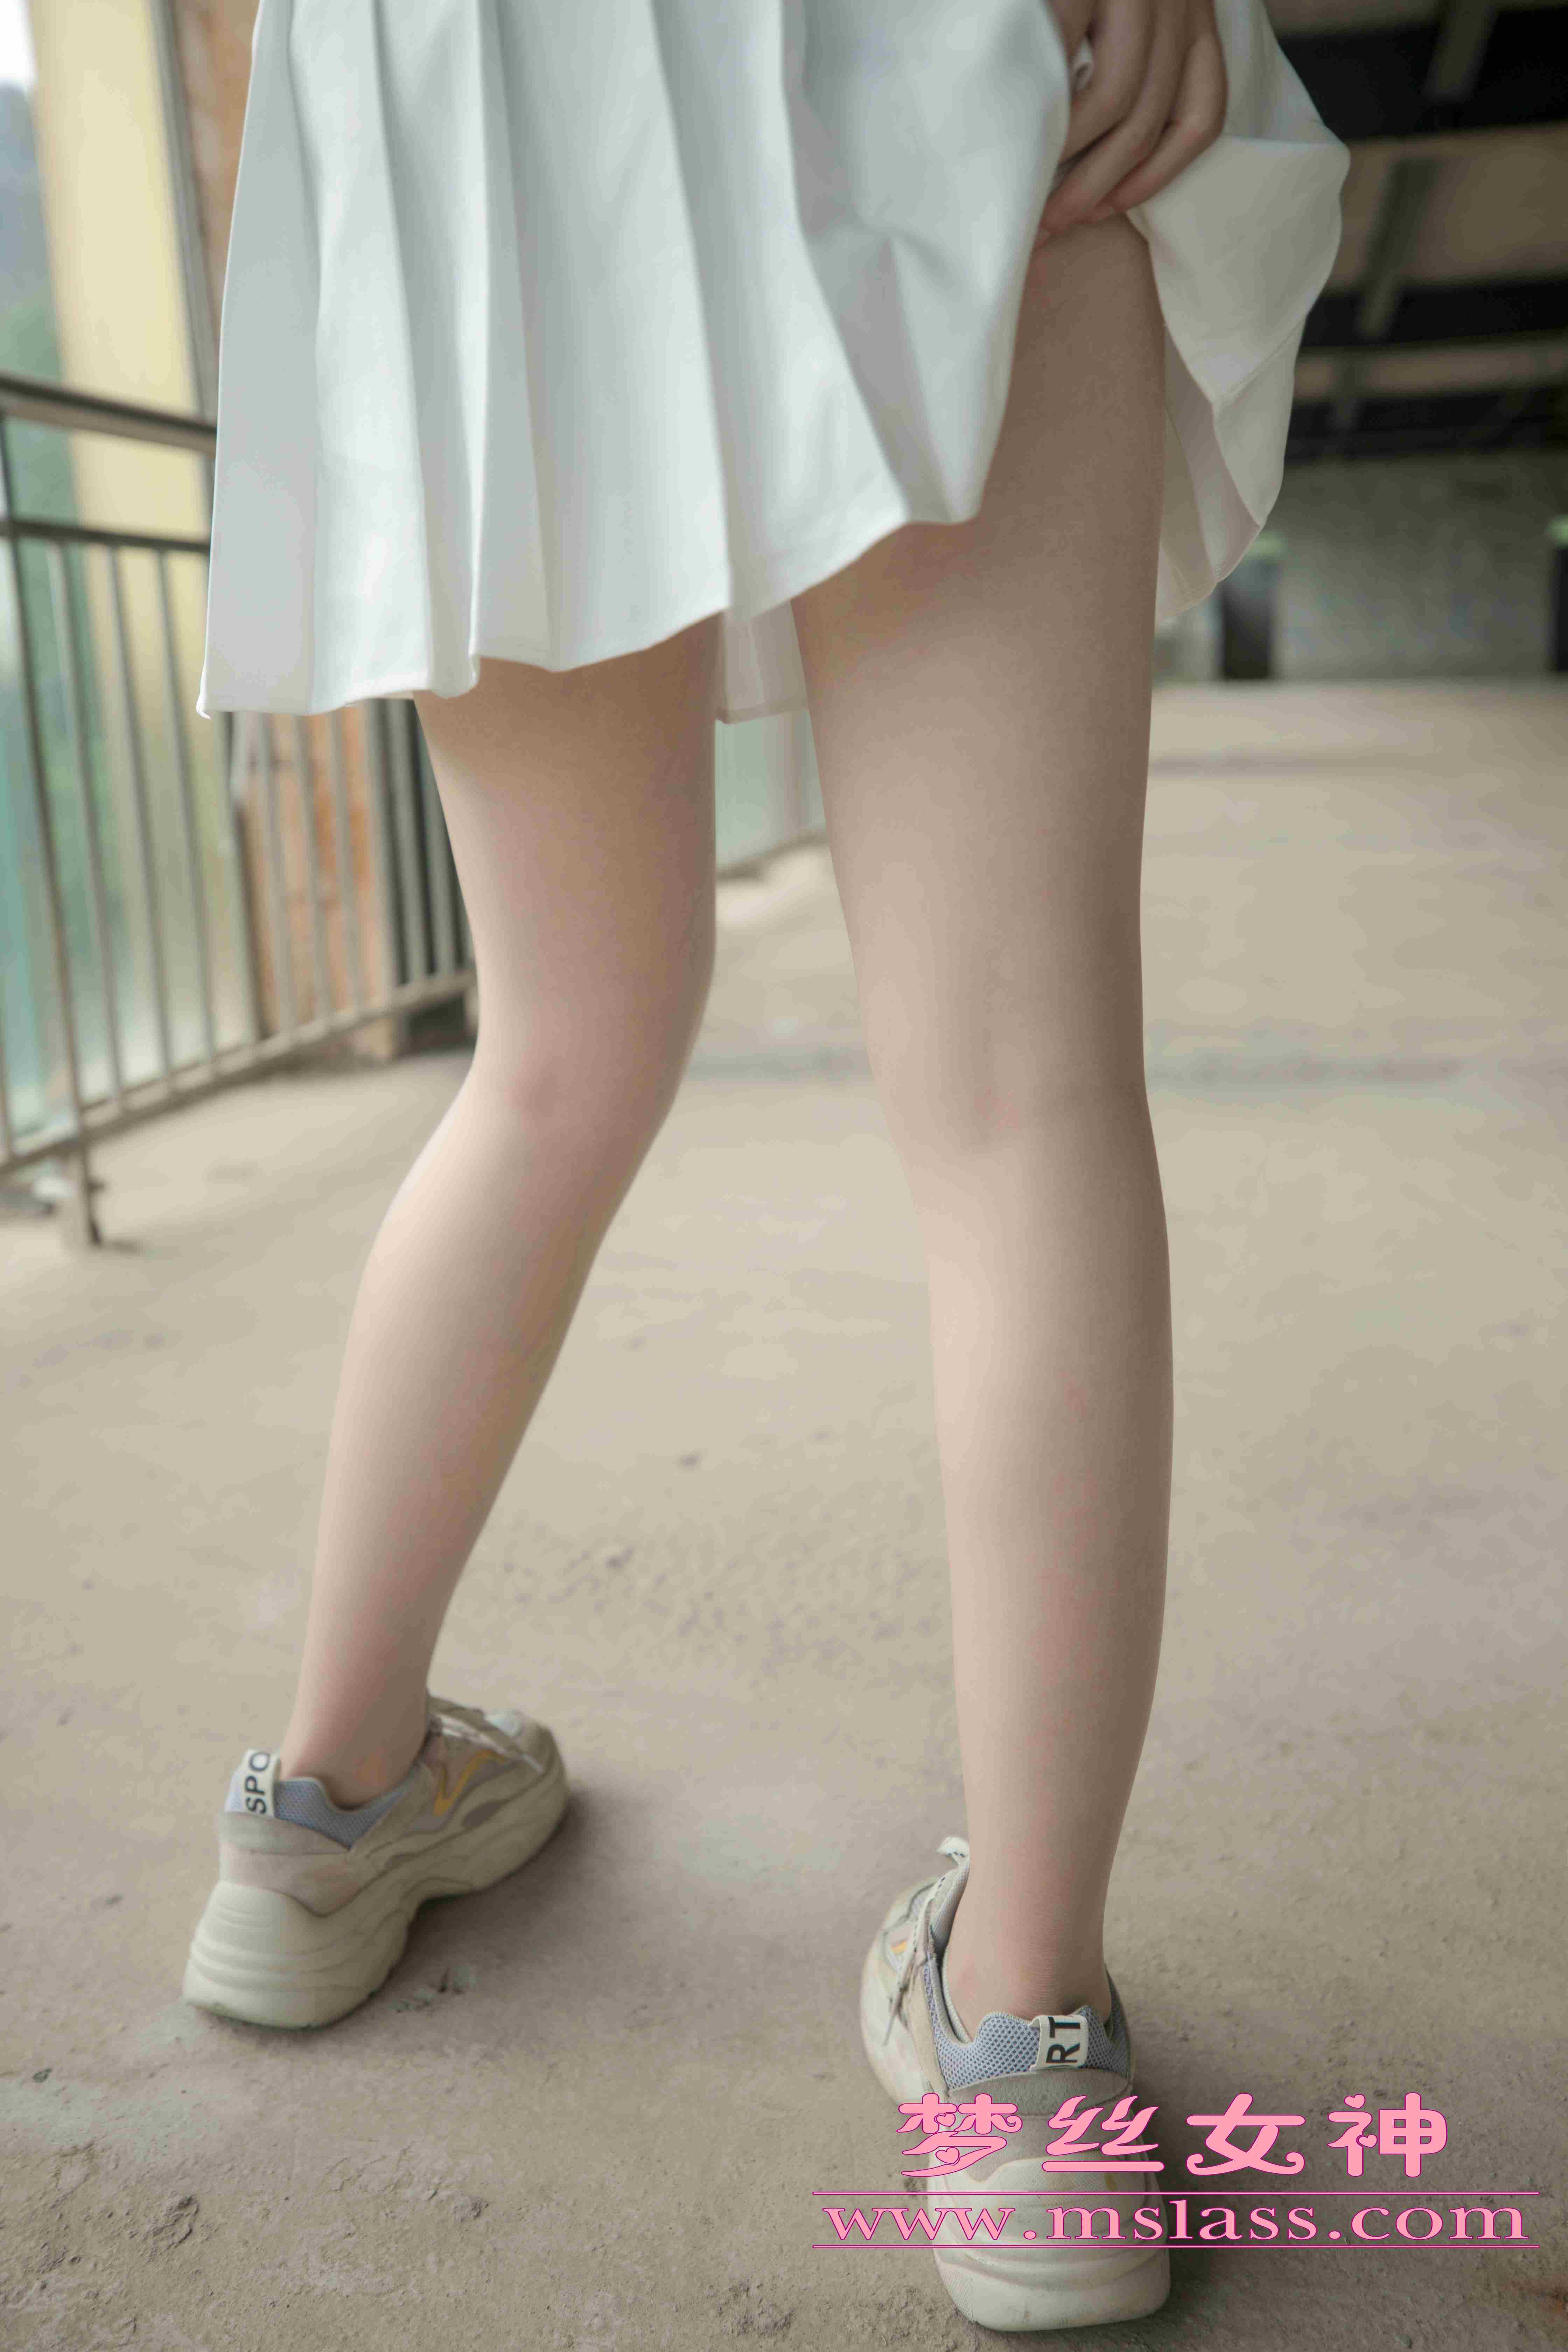 China Beauty Legs and feet 100